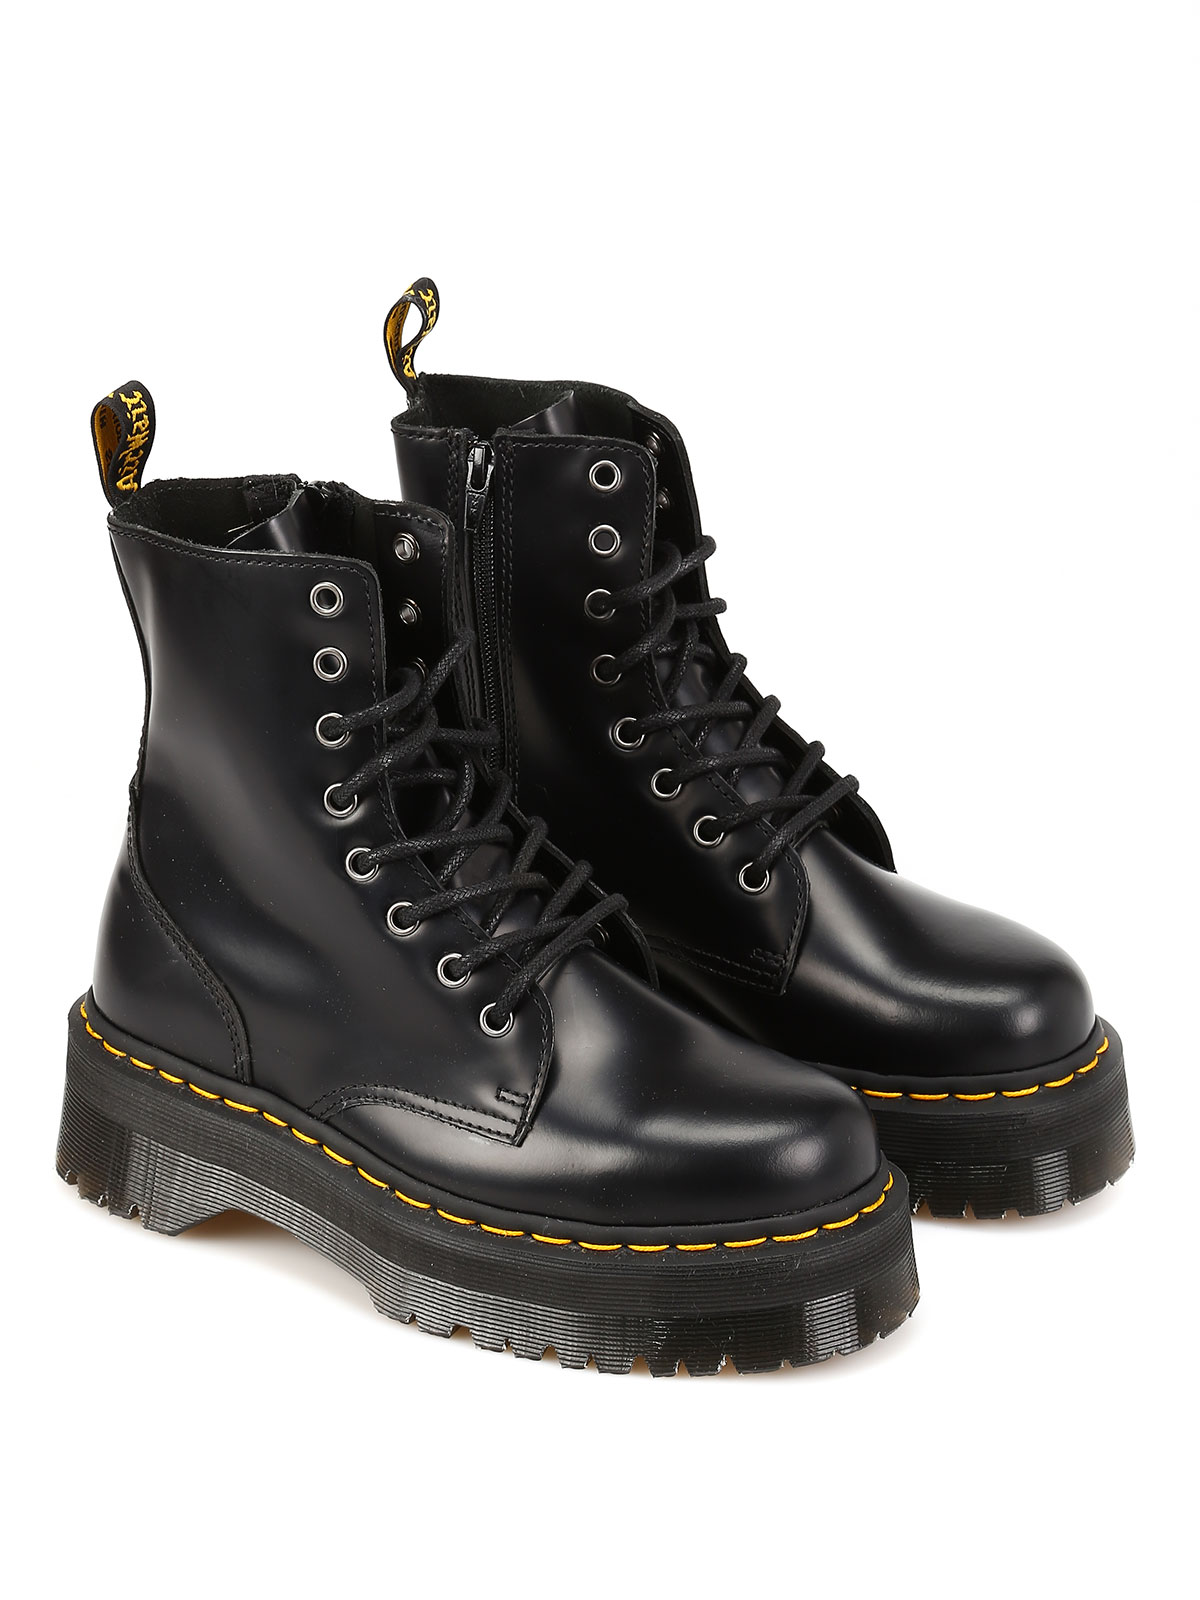 Ankle boots Dr. Martens - Jadon Quad Black - 1460QUADBLACK | iKRIX.com